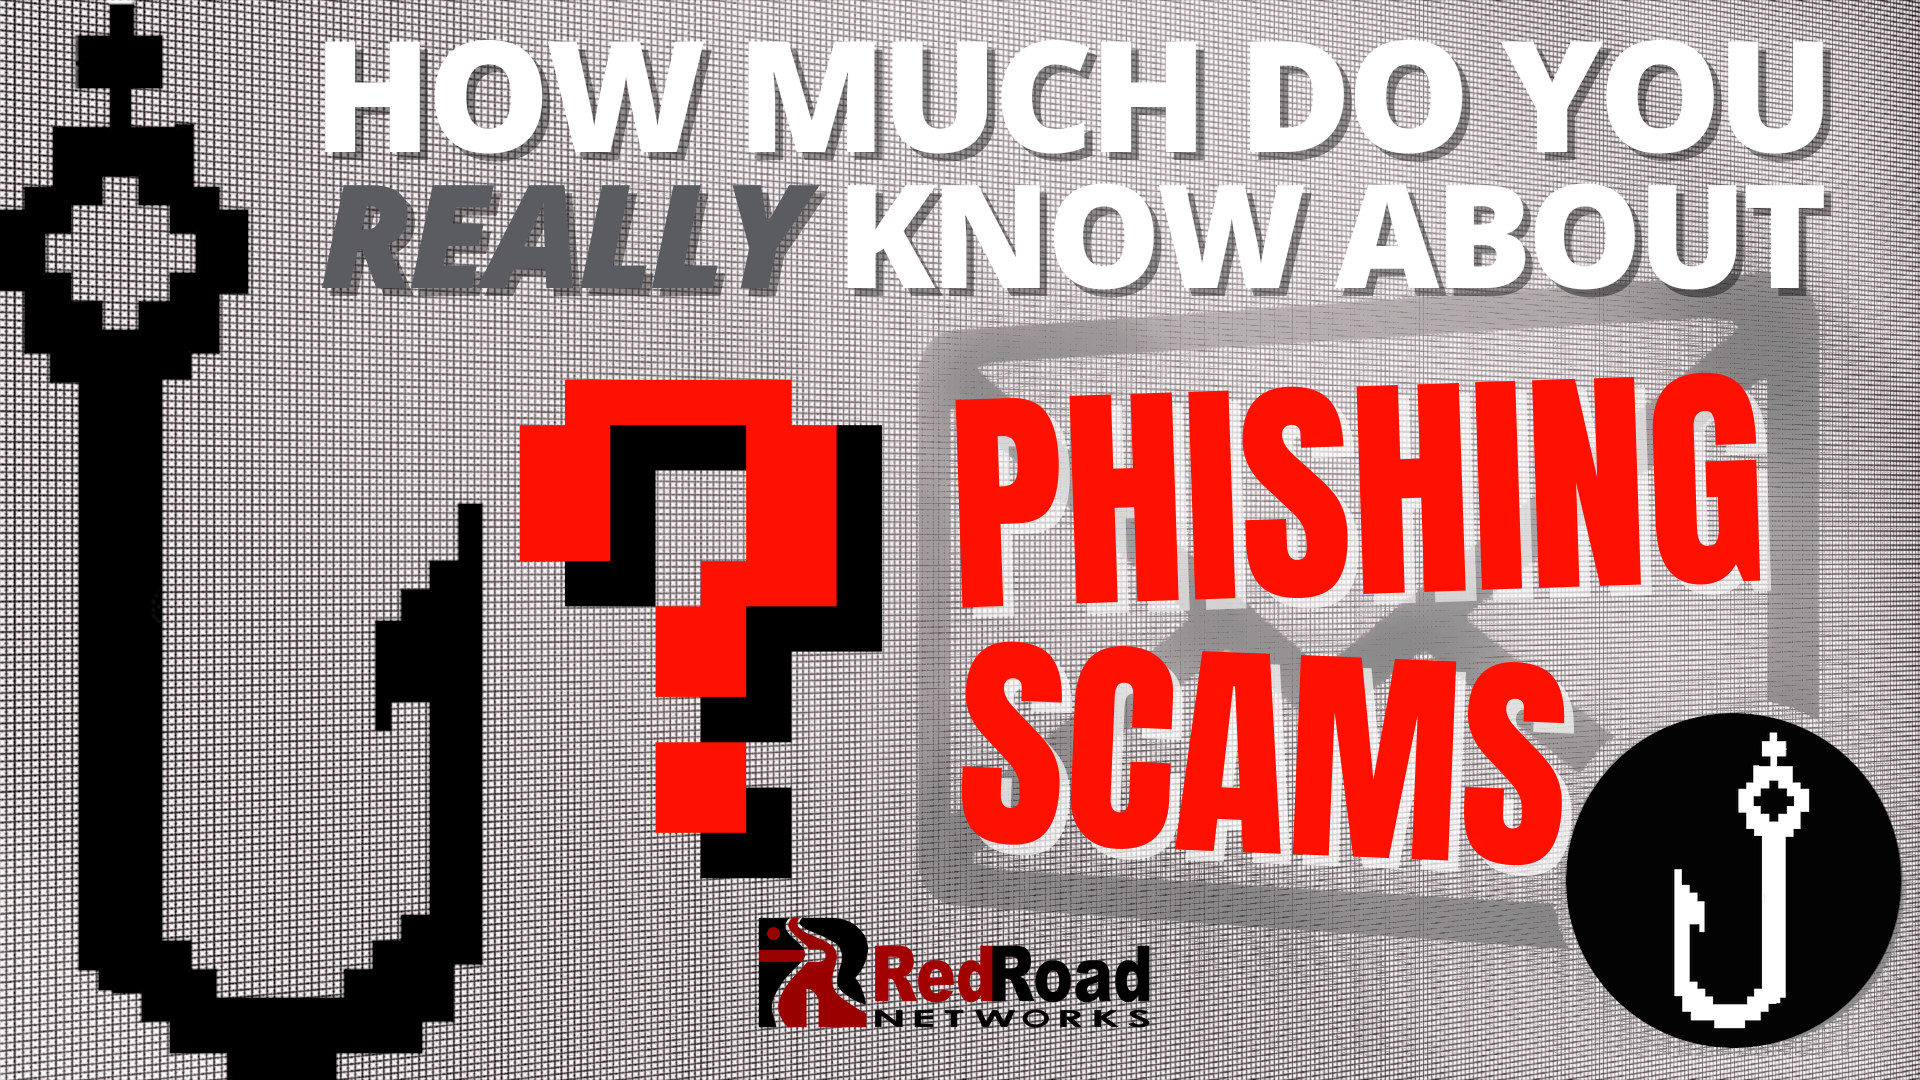 Phishign scams